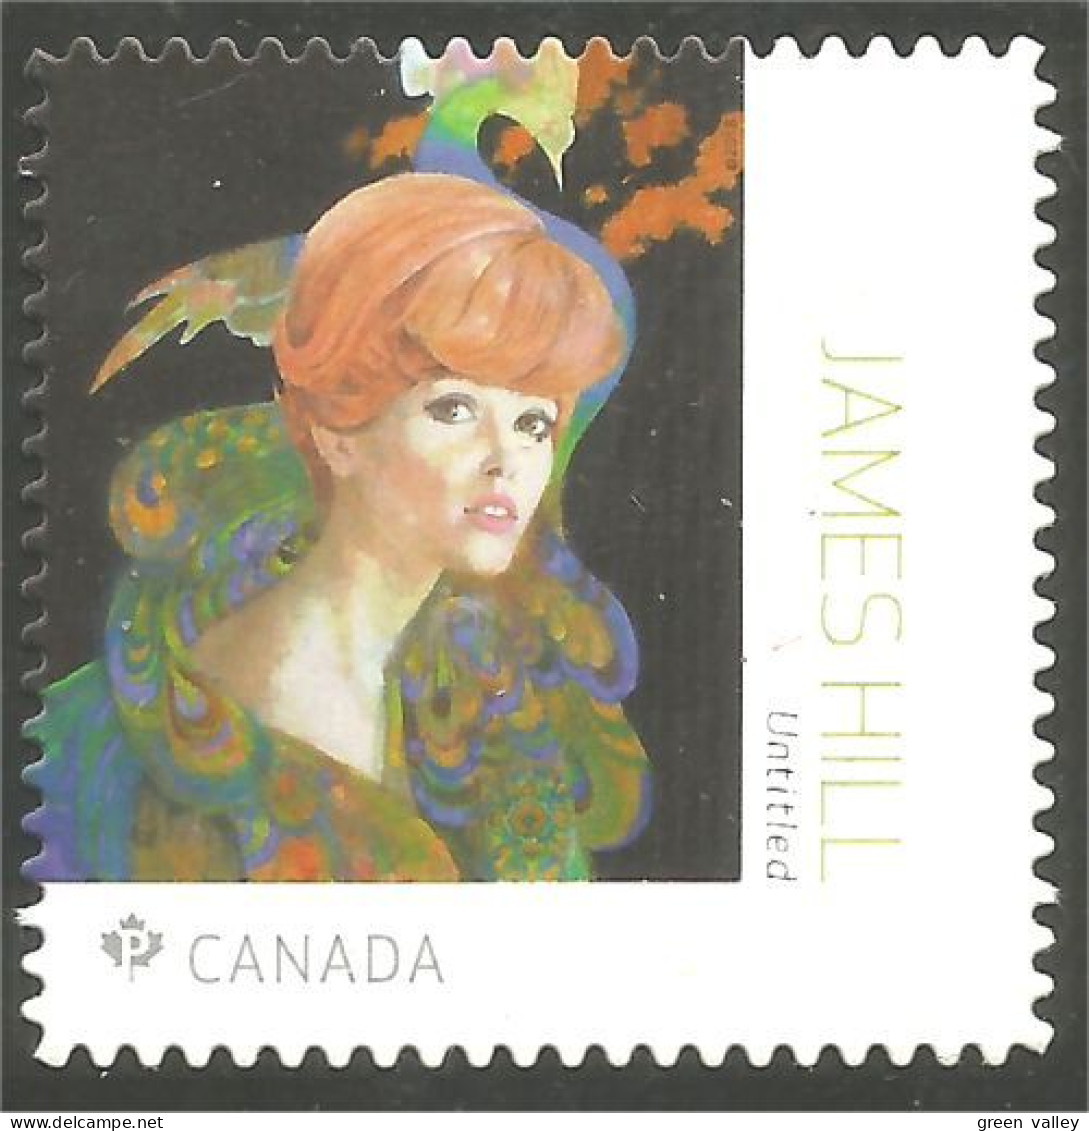 Canada Illustrators Illustrateurs James Hill Annual Collection Annuelle MNH ** Neuf SC (C30-95ib) - Fotografie